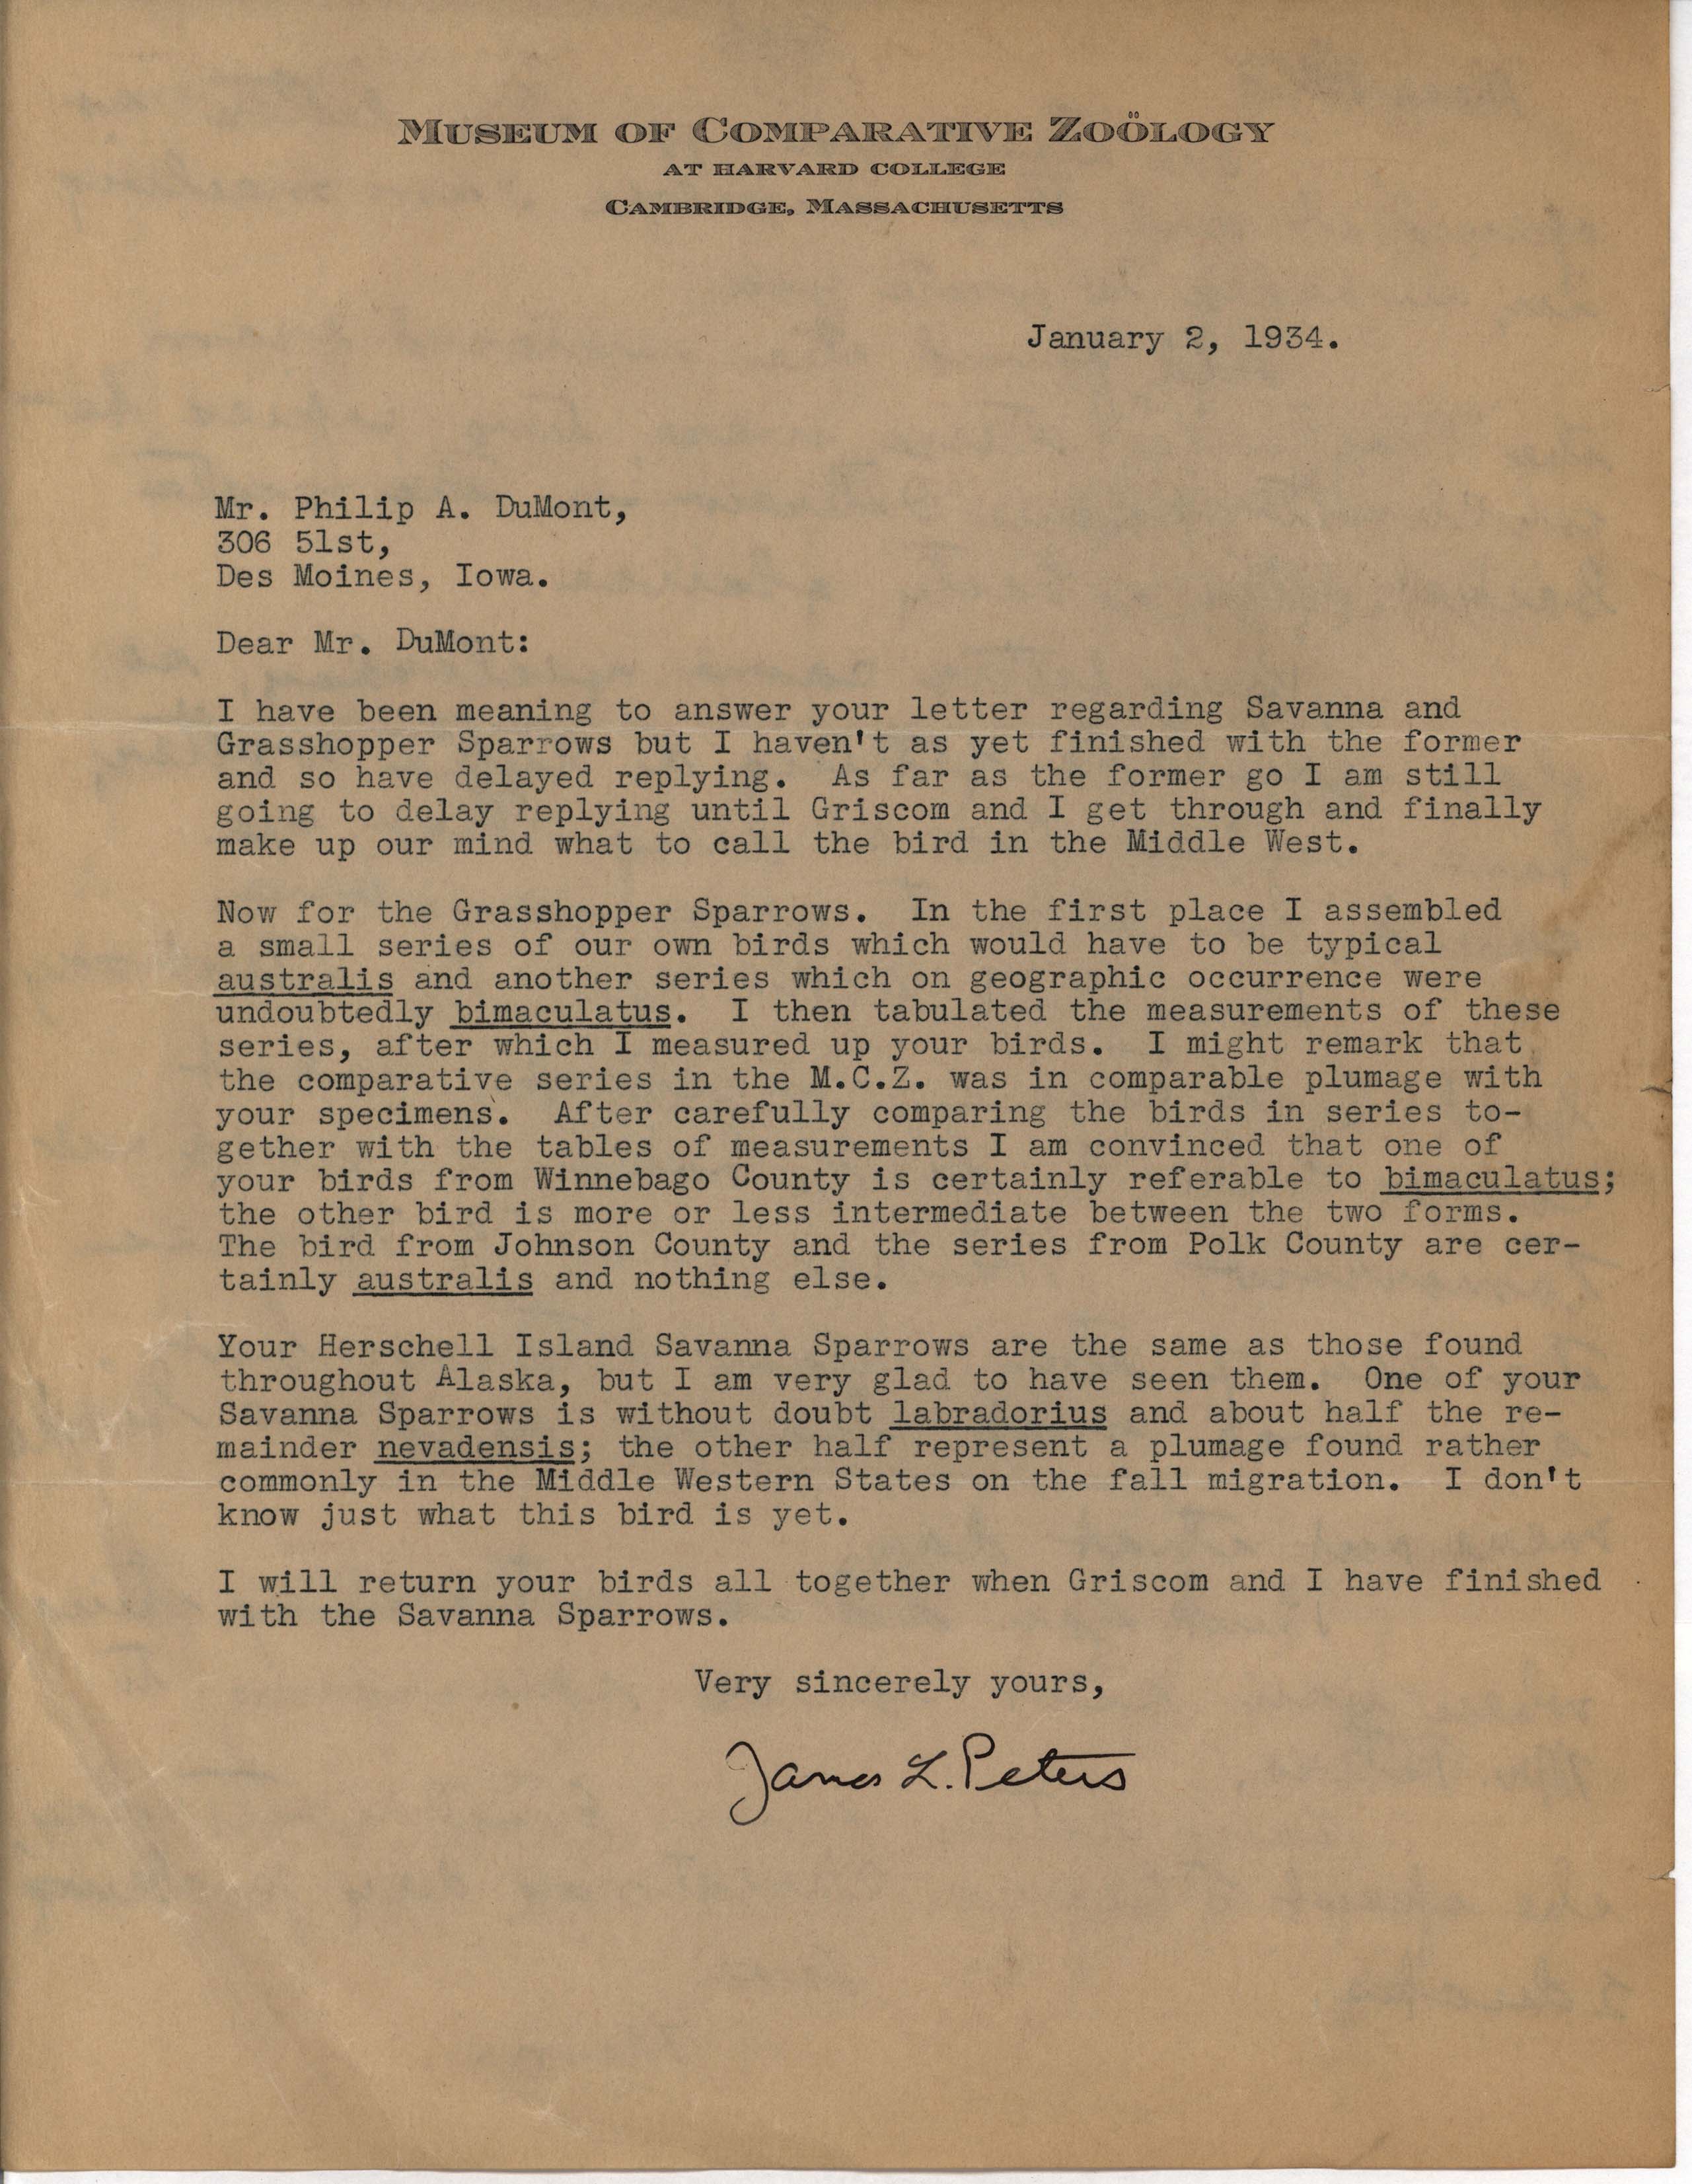 James Peters letter to Philip DuMont regarding Sparrow identification, January 2, 1934